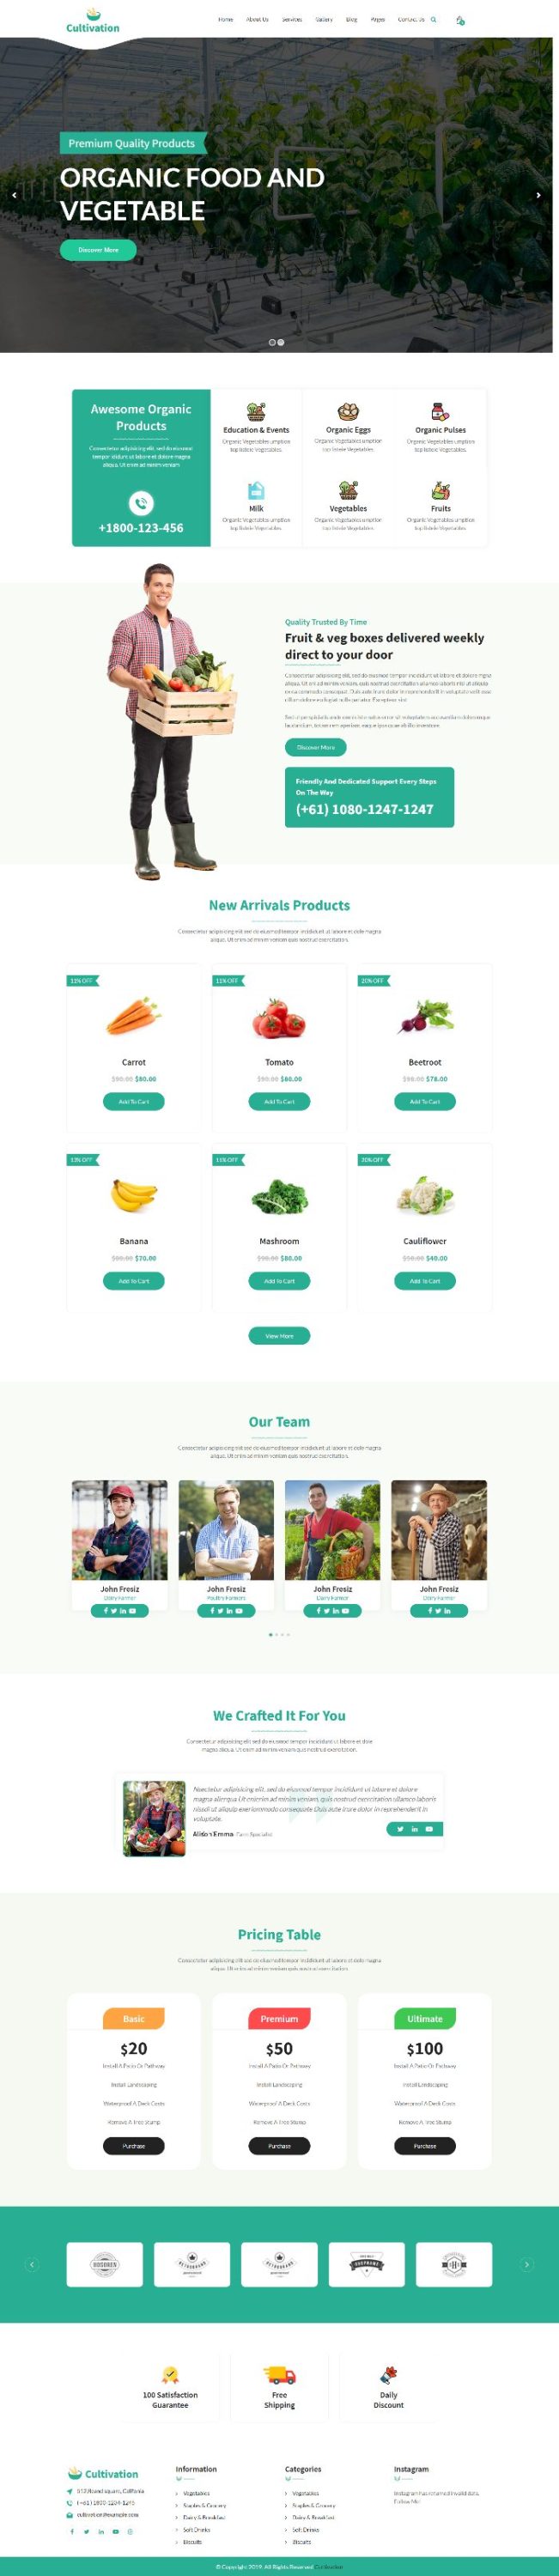 MẪU WEBSITE BÁN HÀNG - Food Farm - WordPCltivaution ress Themes